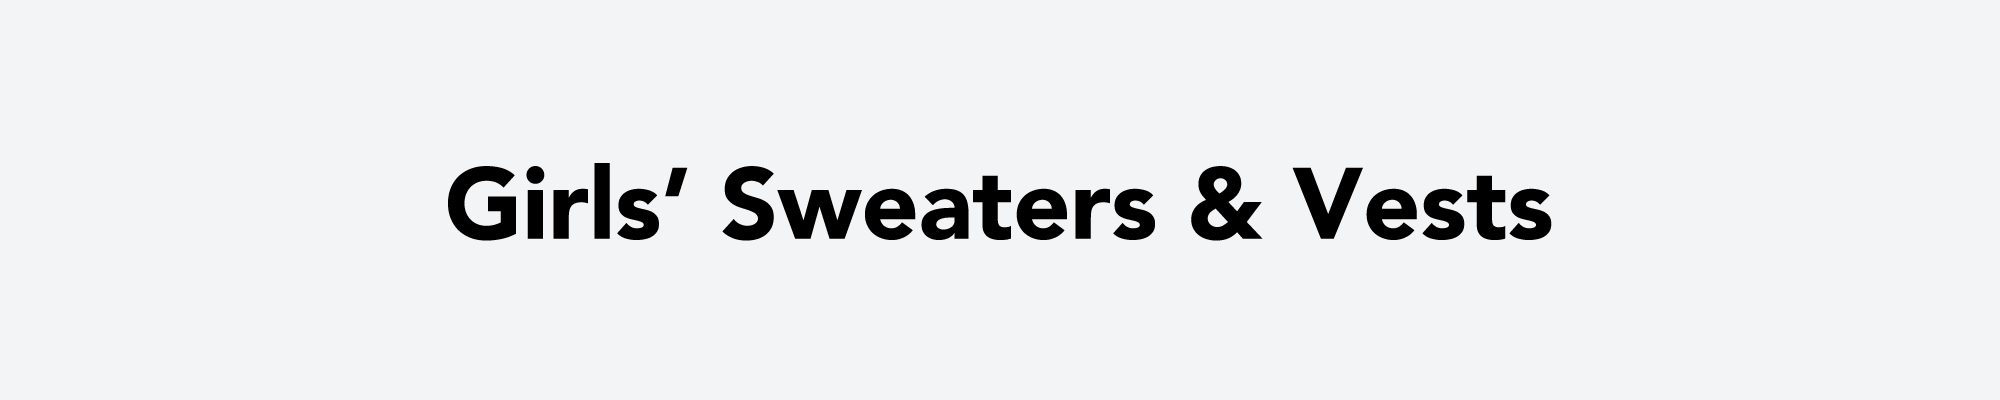 Girls' Sweaters & Vests